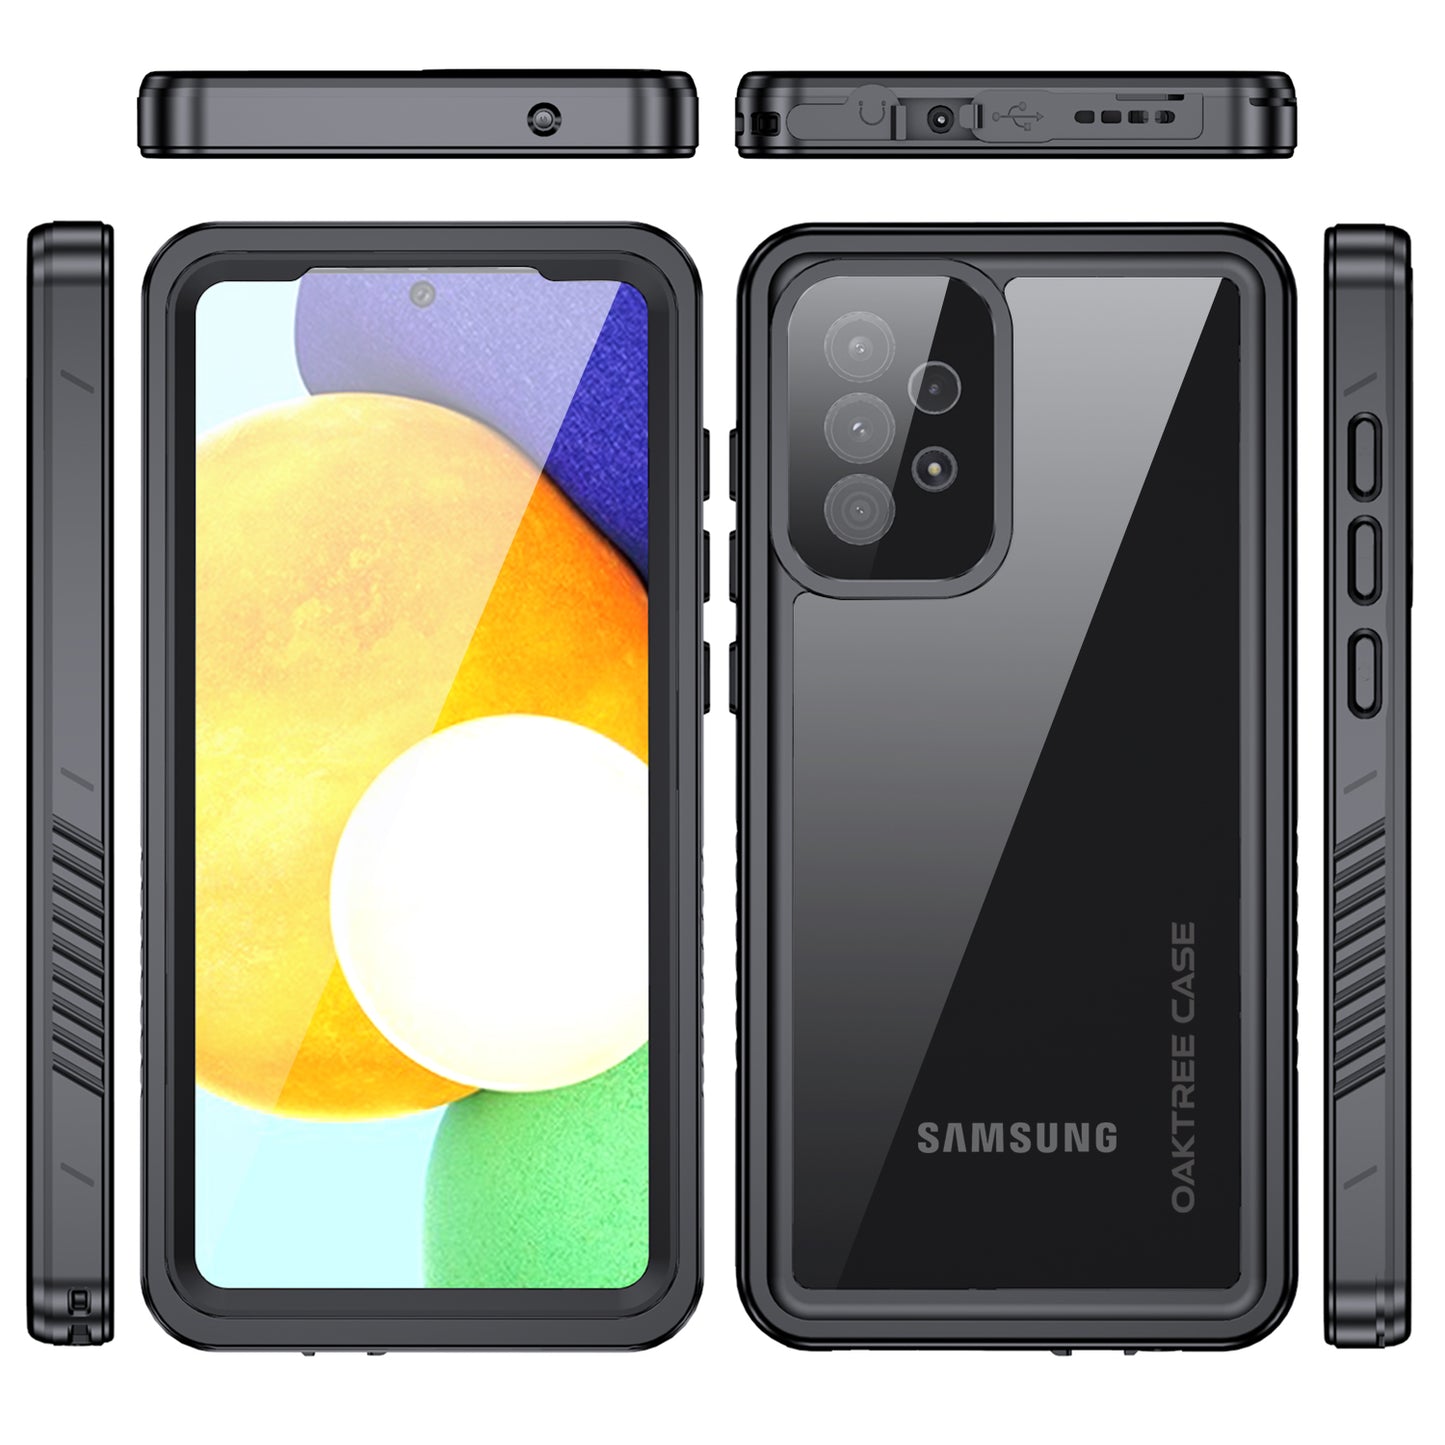 Oaktree Samsung Galaxy A52/52s 5G Waterproof Full-Body Rugged Case - Black / Clear